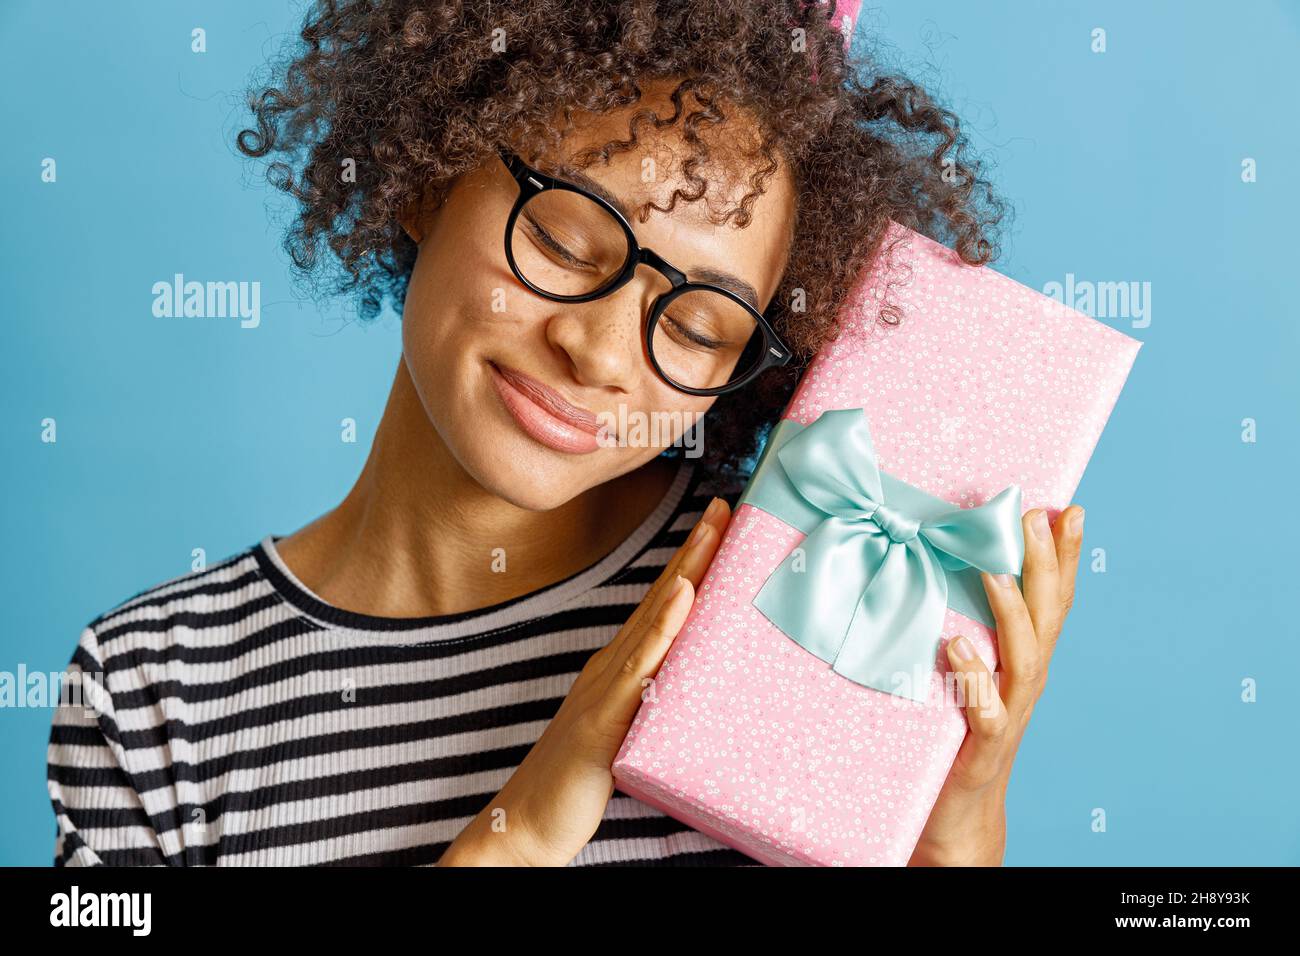 Joyful multiethnic woman holding gift box with ribbon Stock Photo